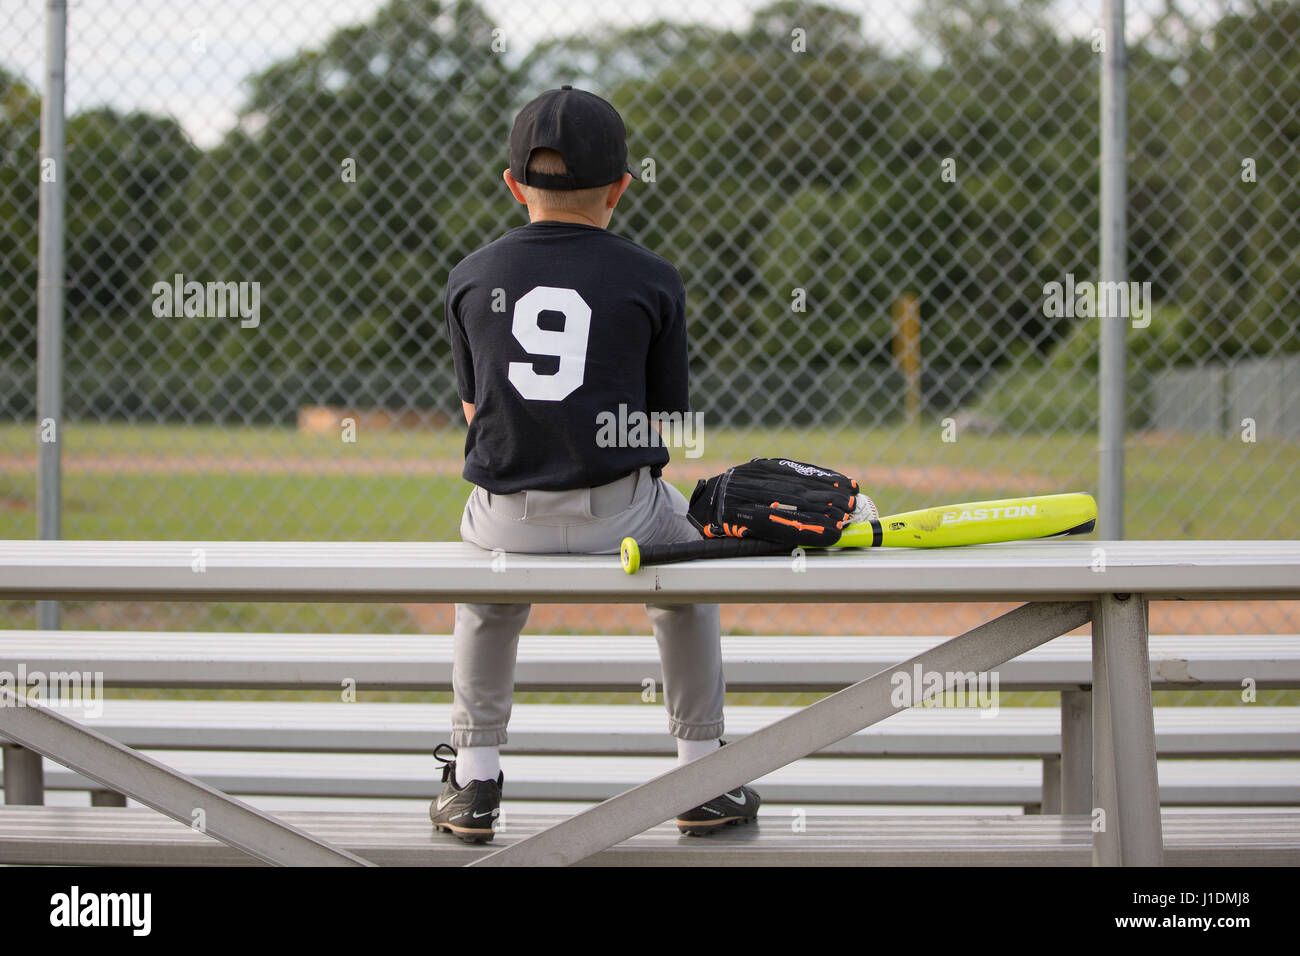 8 year old boy in baseball uniform at baseball field with baseball bat and mitt Stock Photo